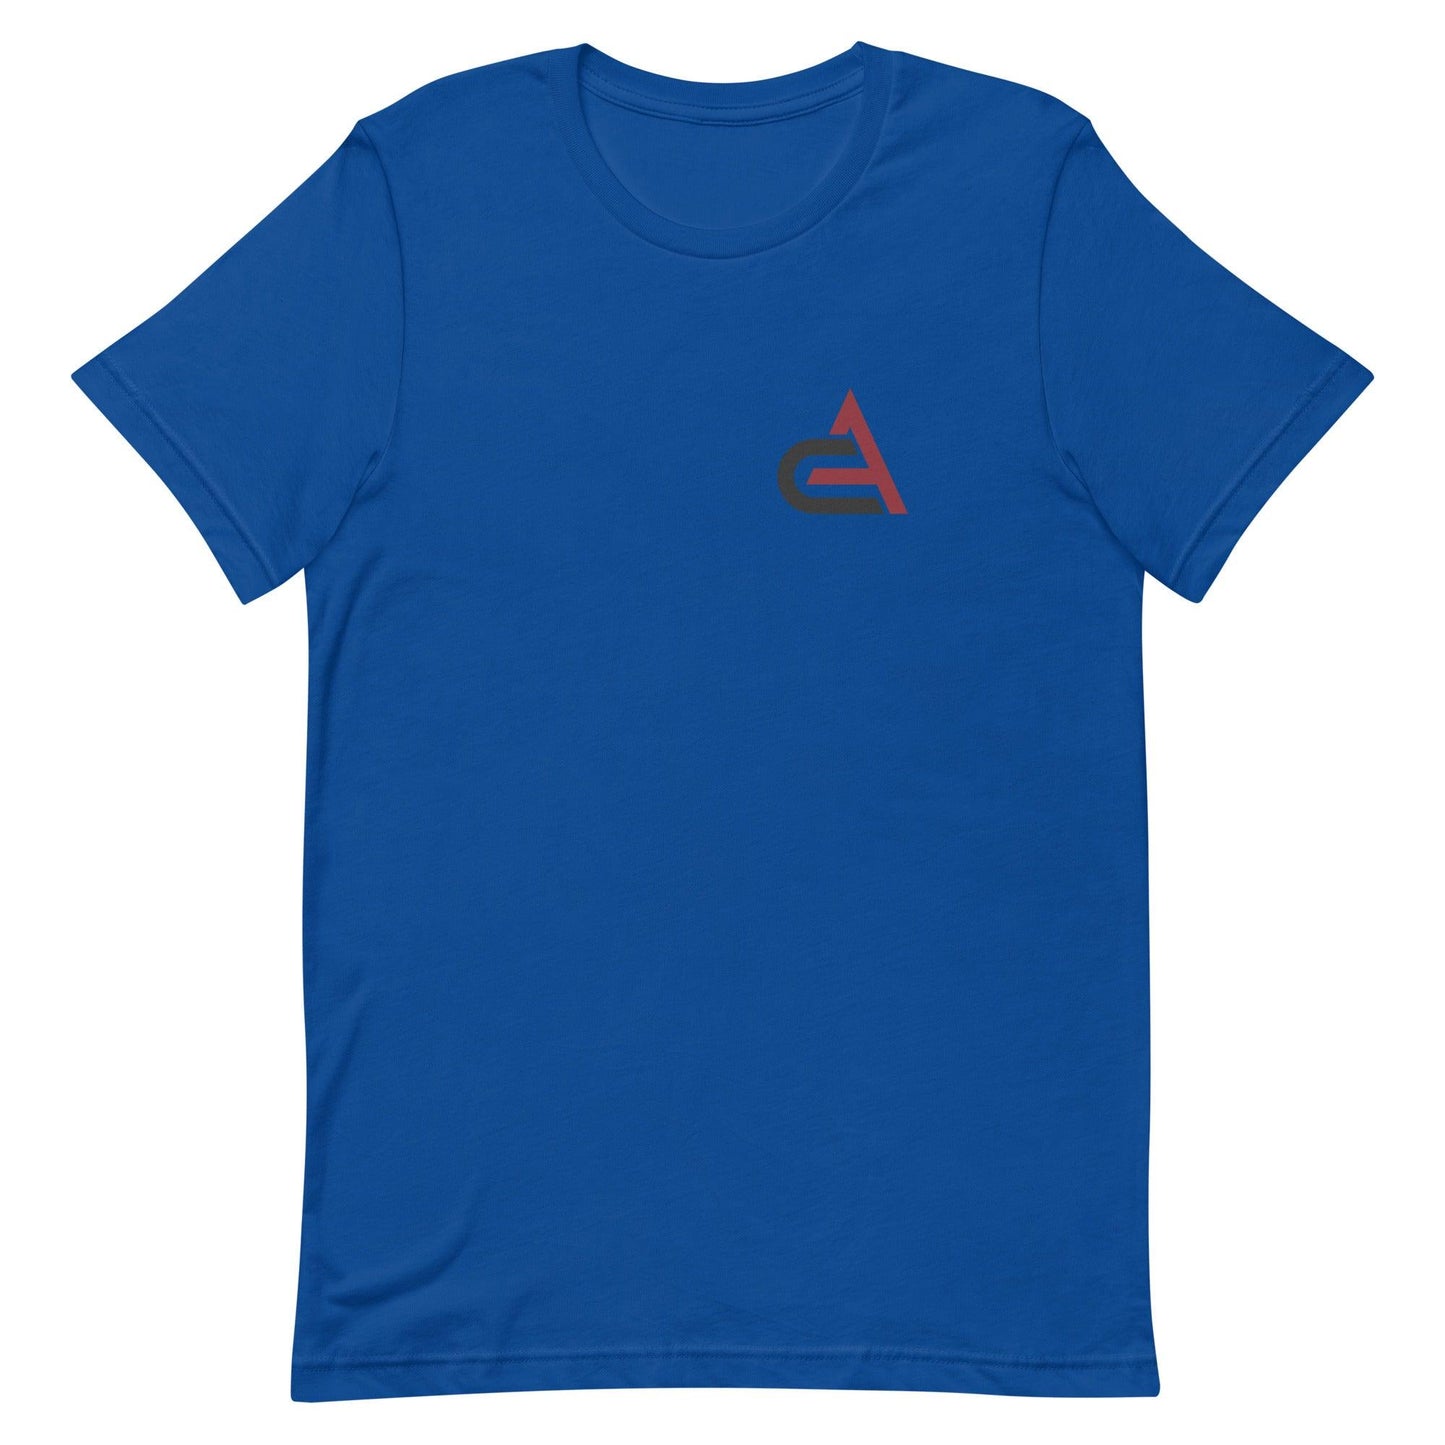 Cade Austin "Elite" t-shirt - Fan Arch